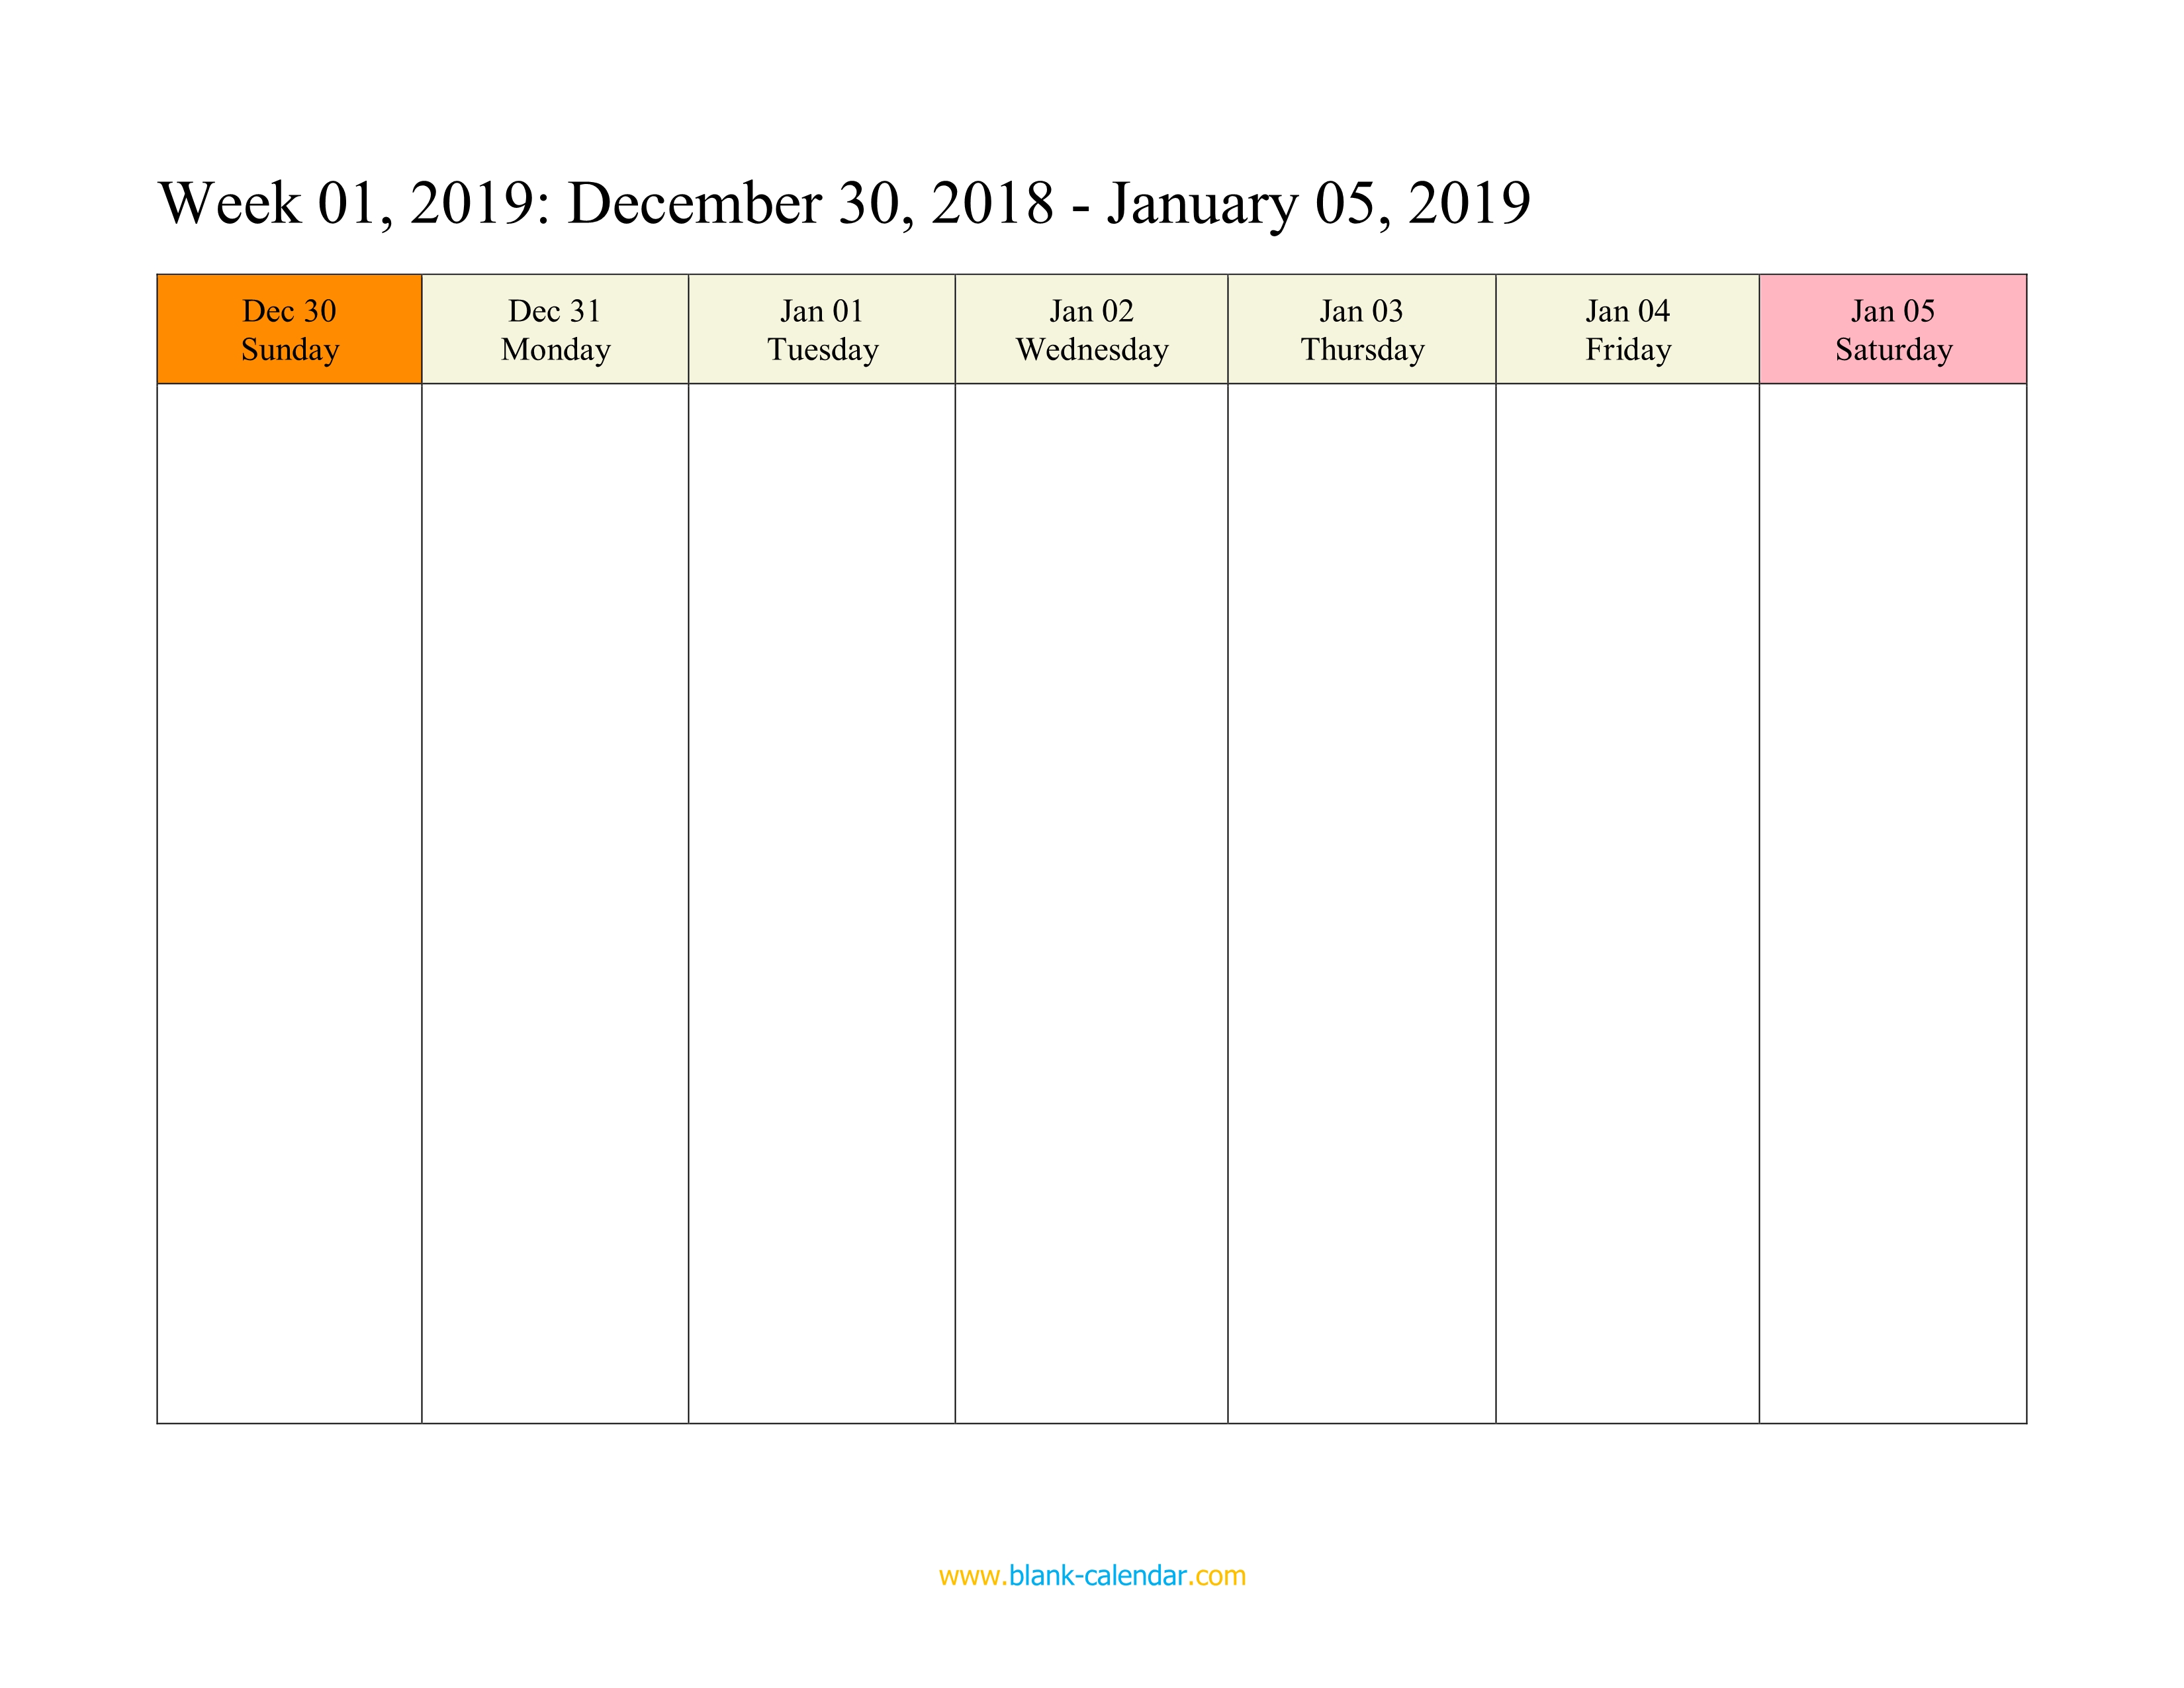 microsoft word weekly calendar template